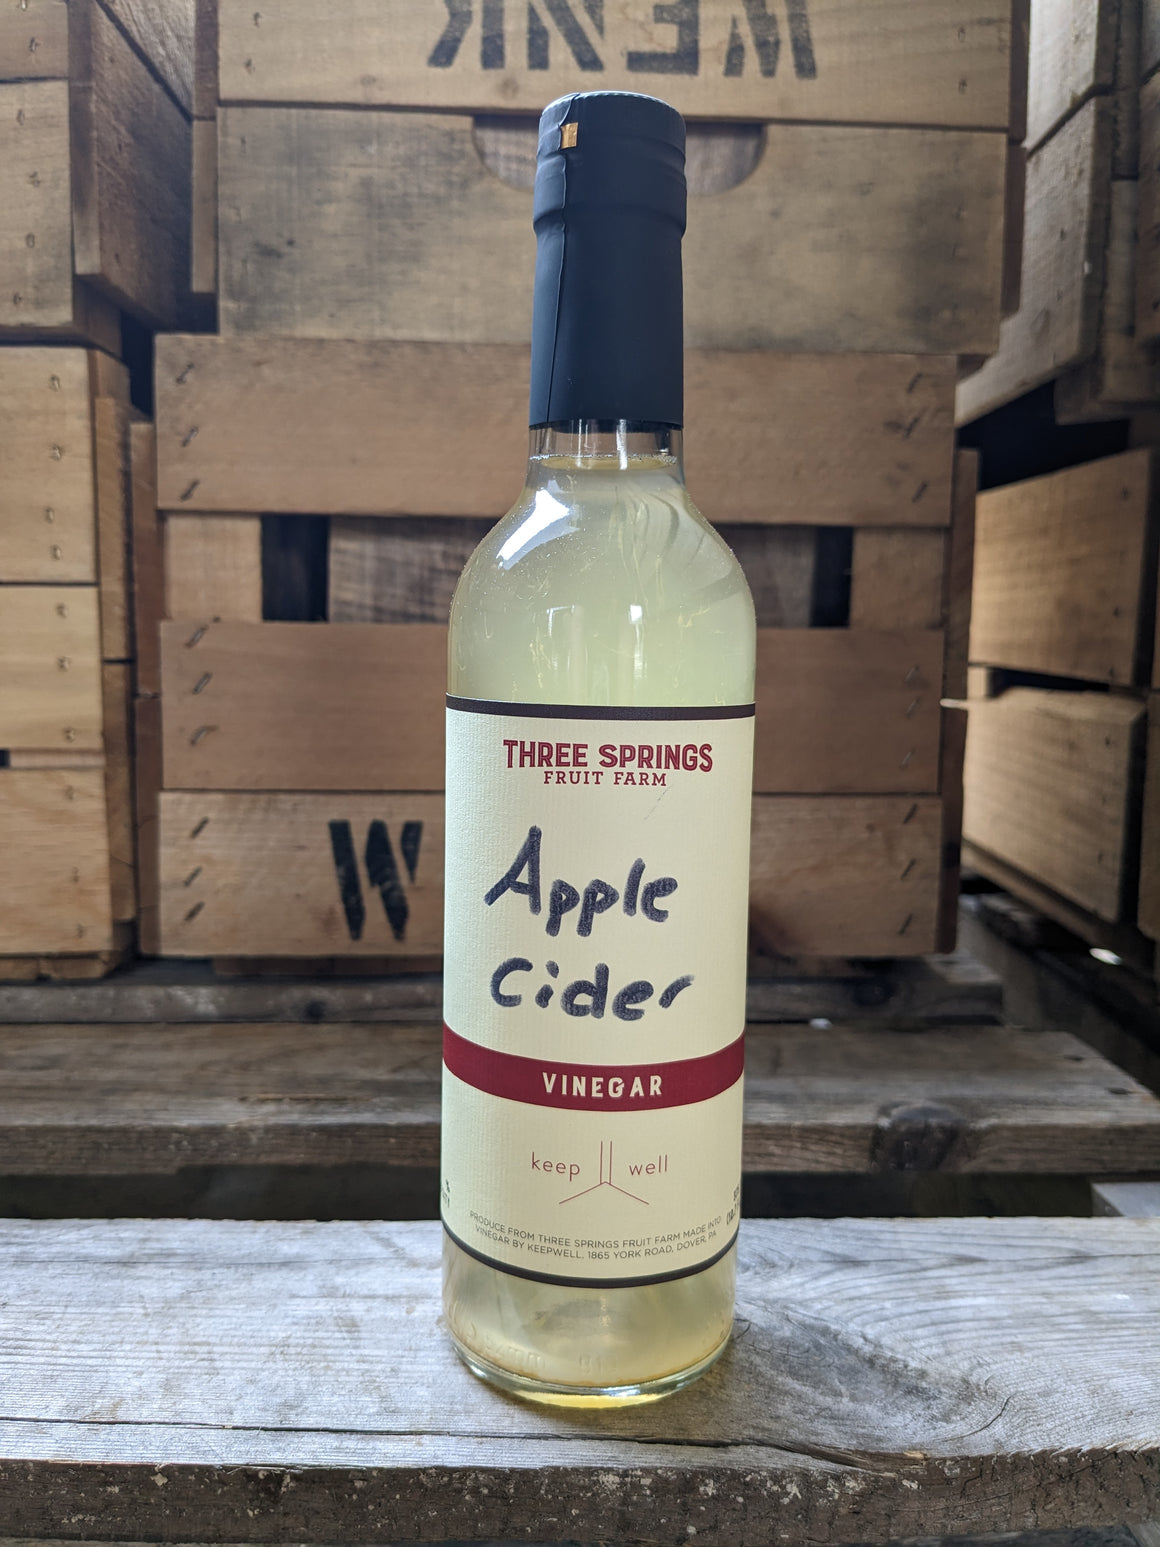 Three Springs Fruit Farm Apple Cider Vinegar. Made from Three Springs fresh pressed apple cider by Keepwell.